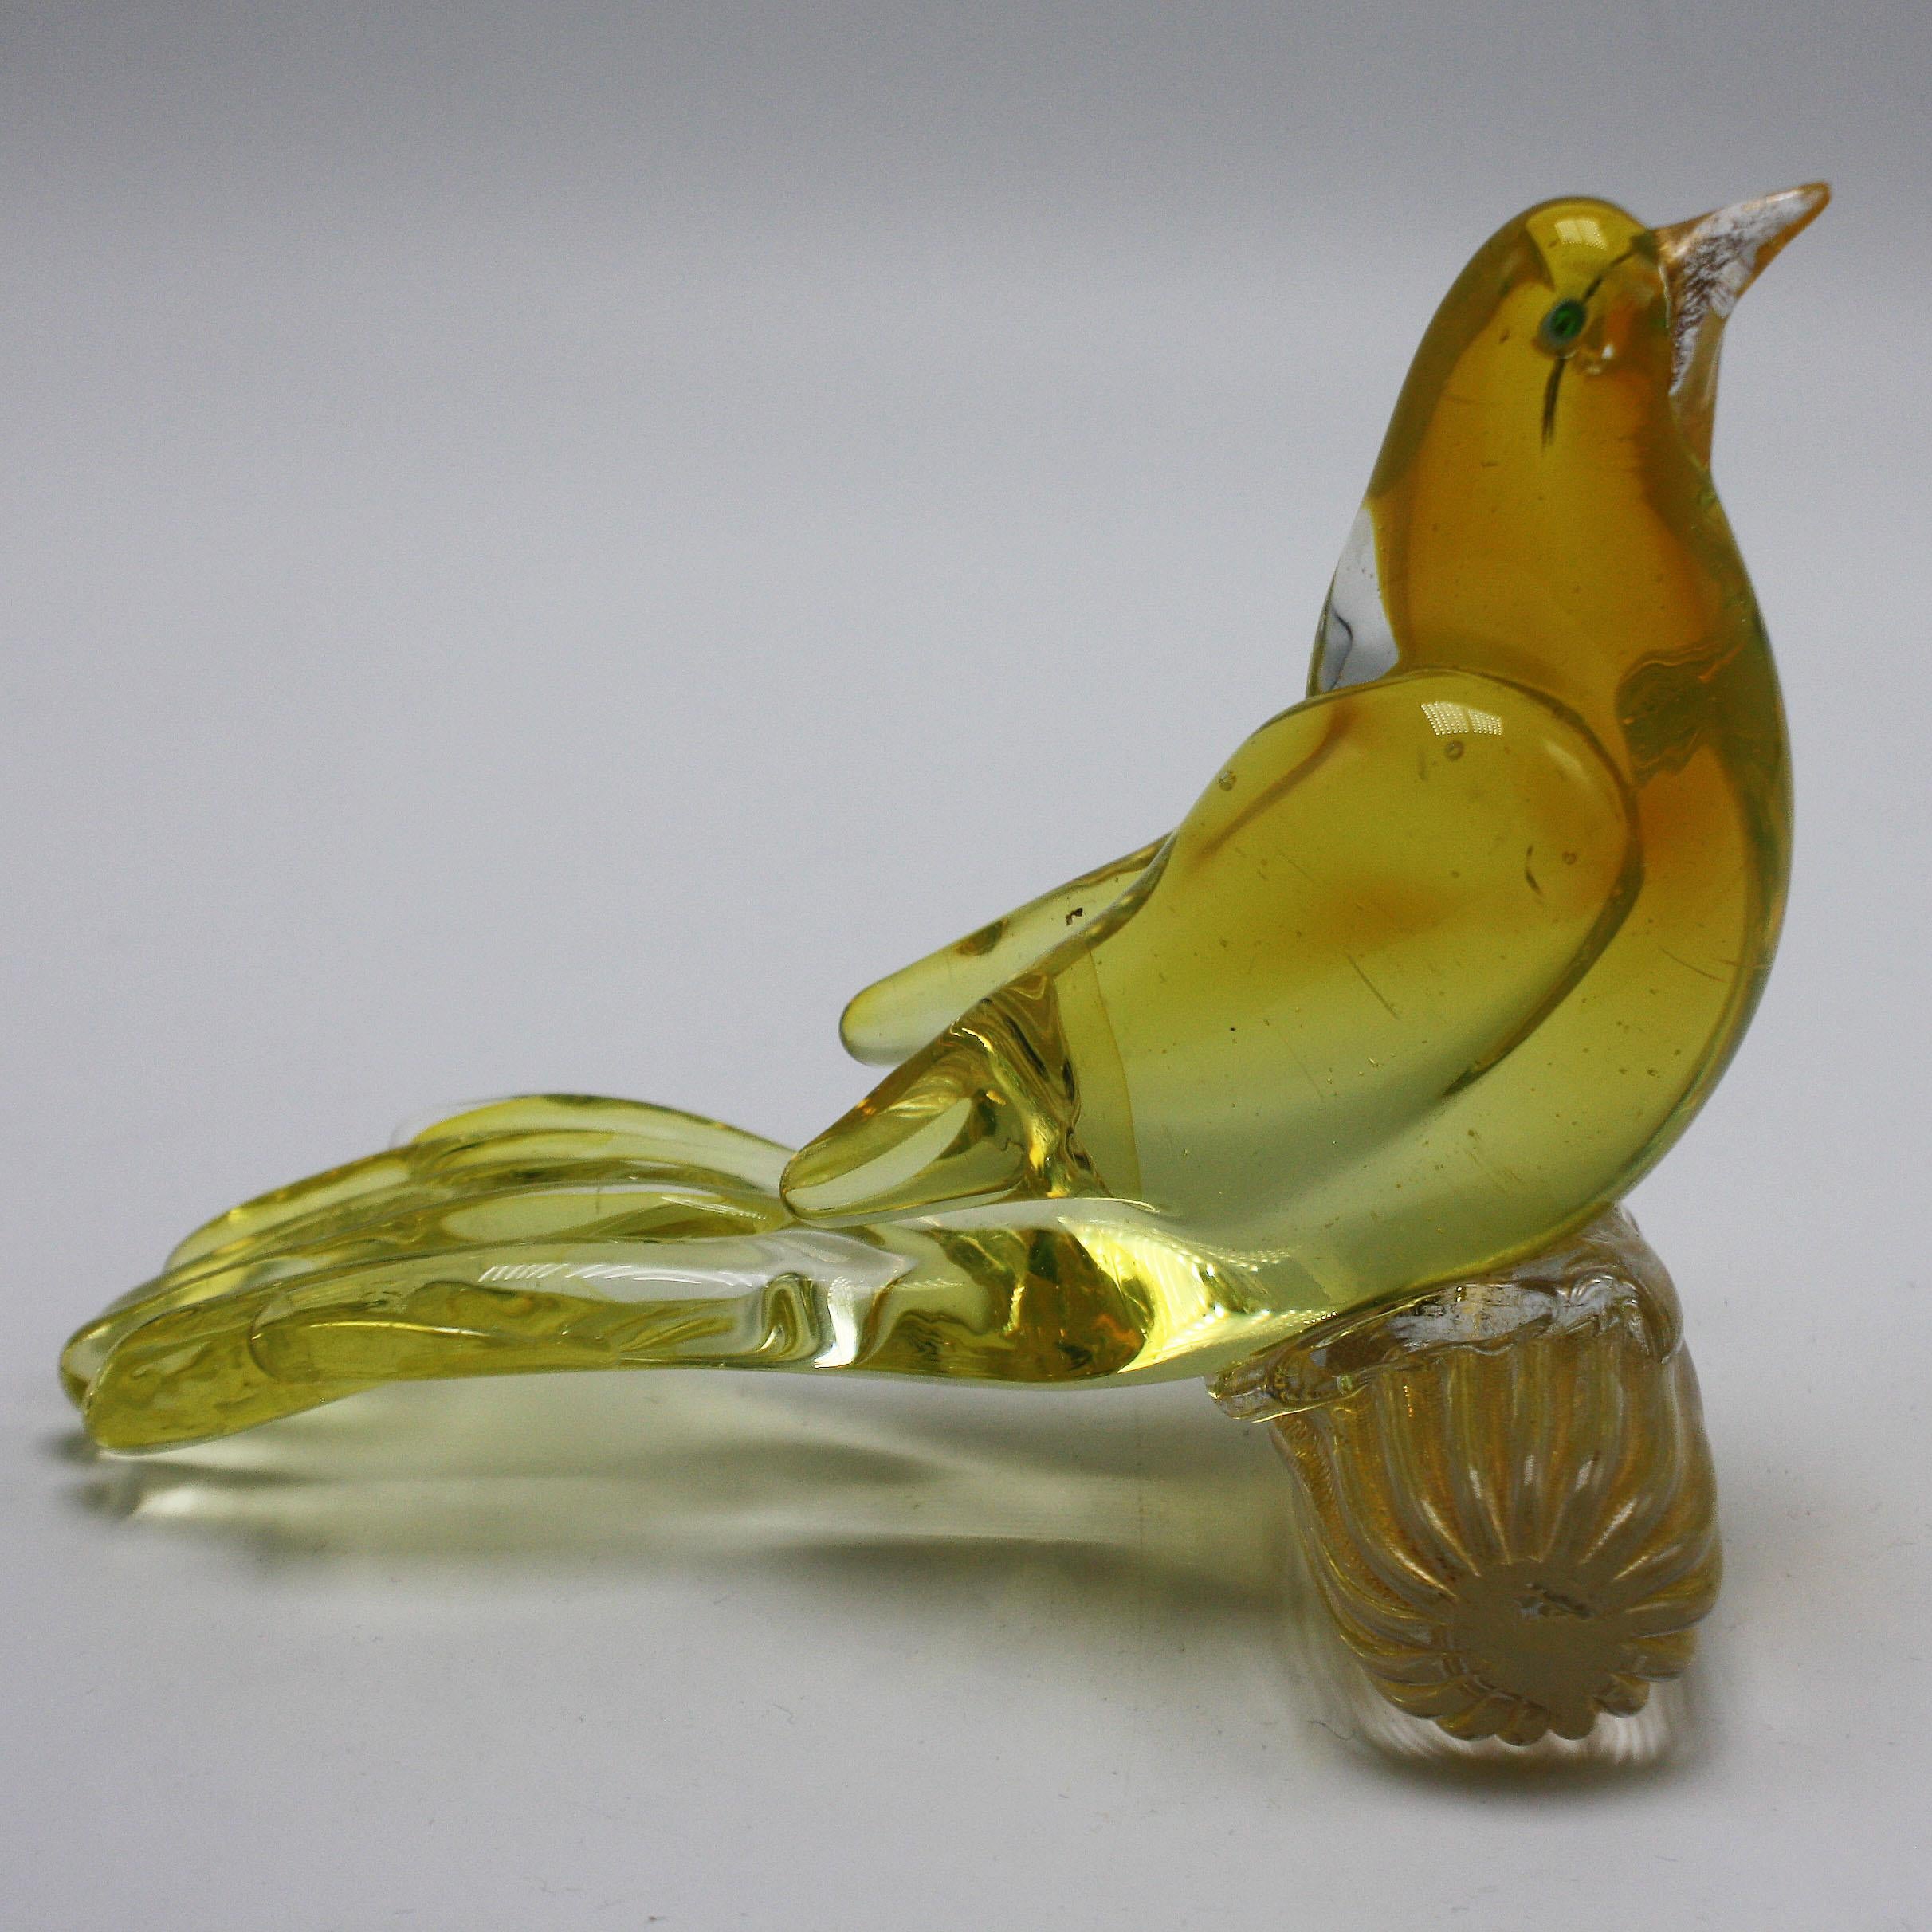 Iridescent Murano glass perched bird, circa 1950.
$325